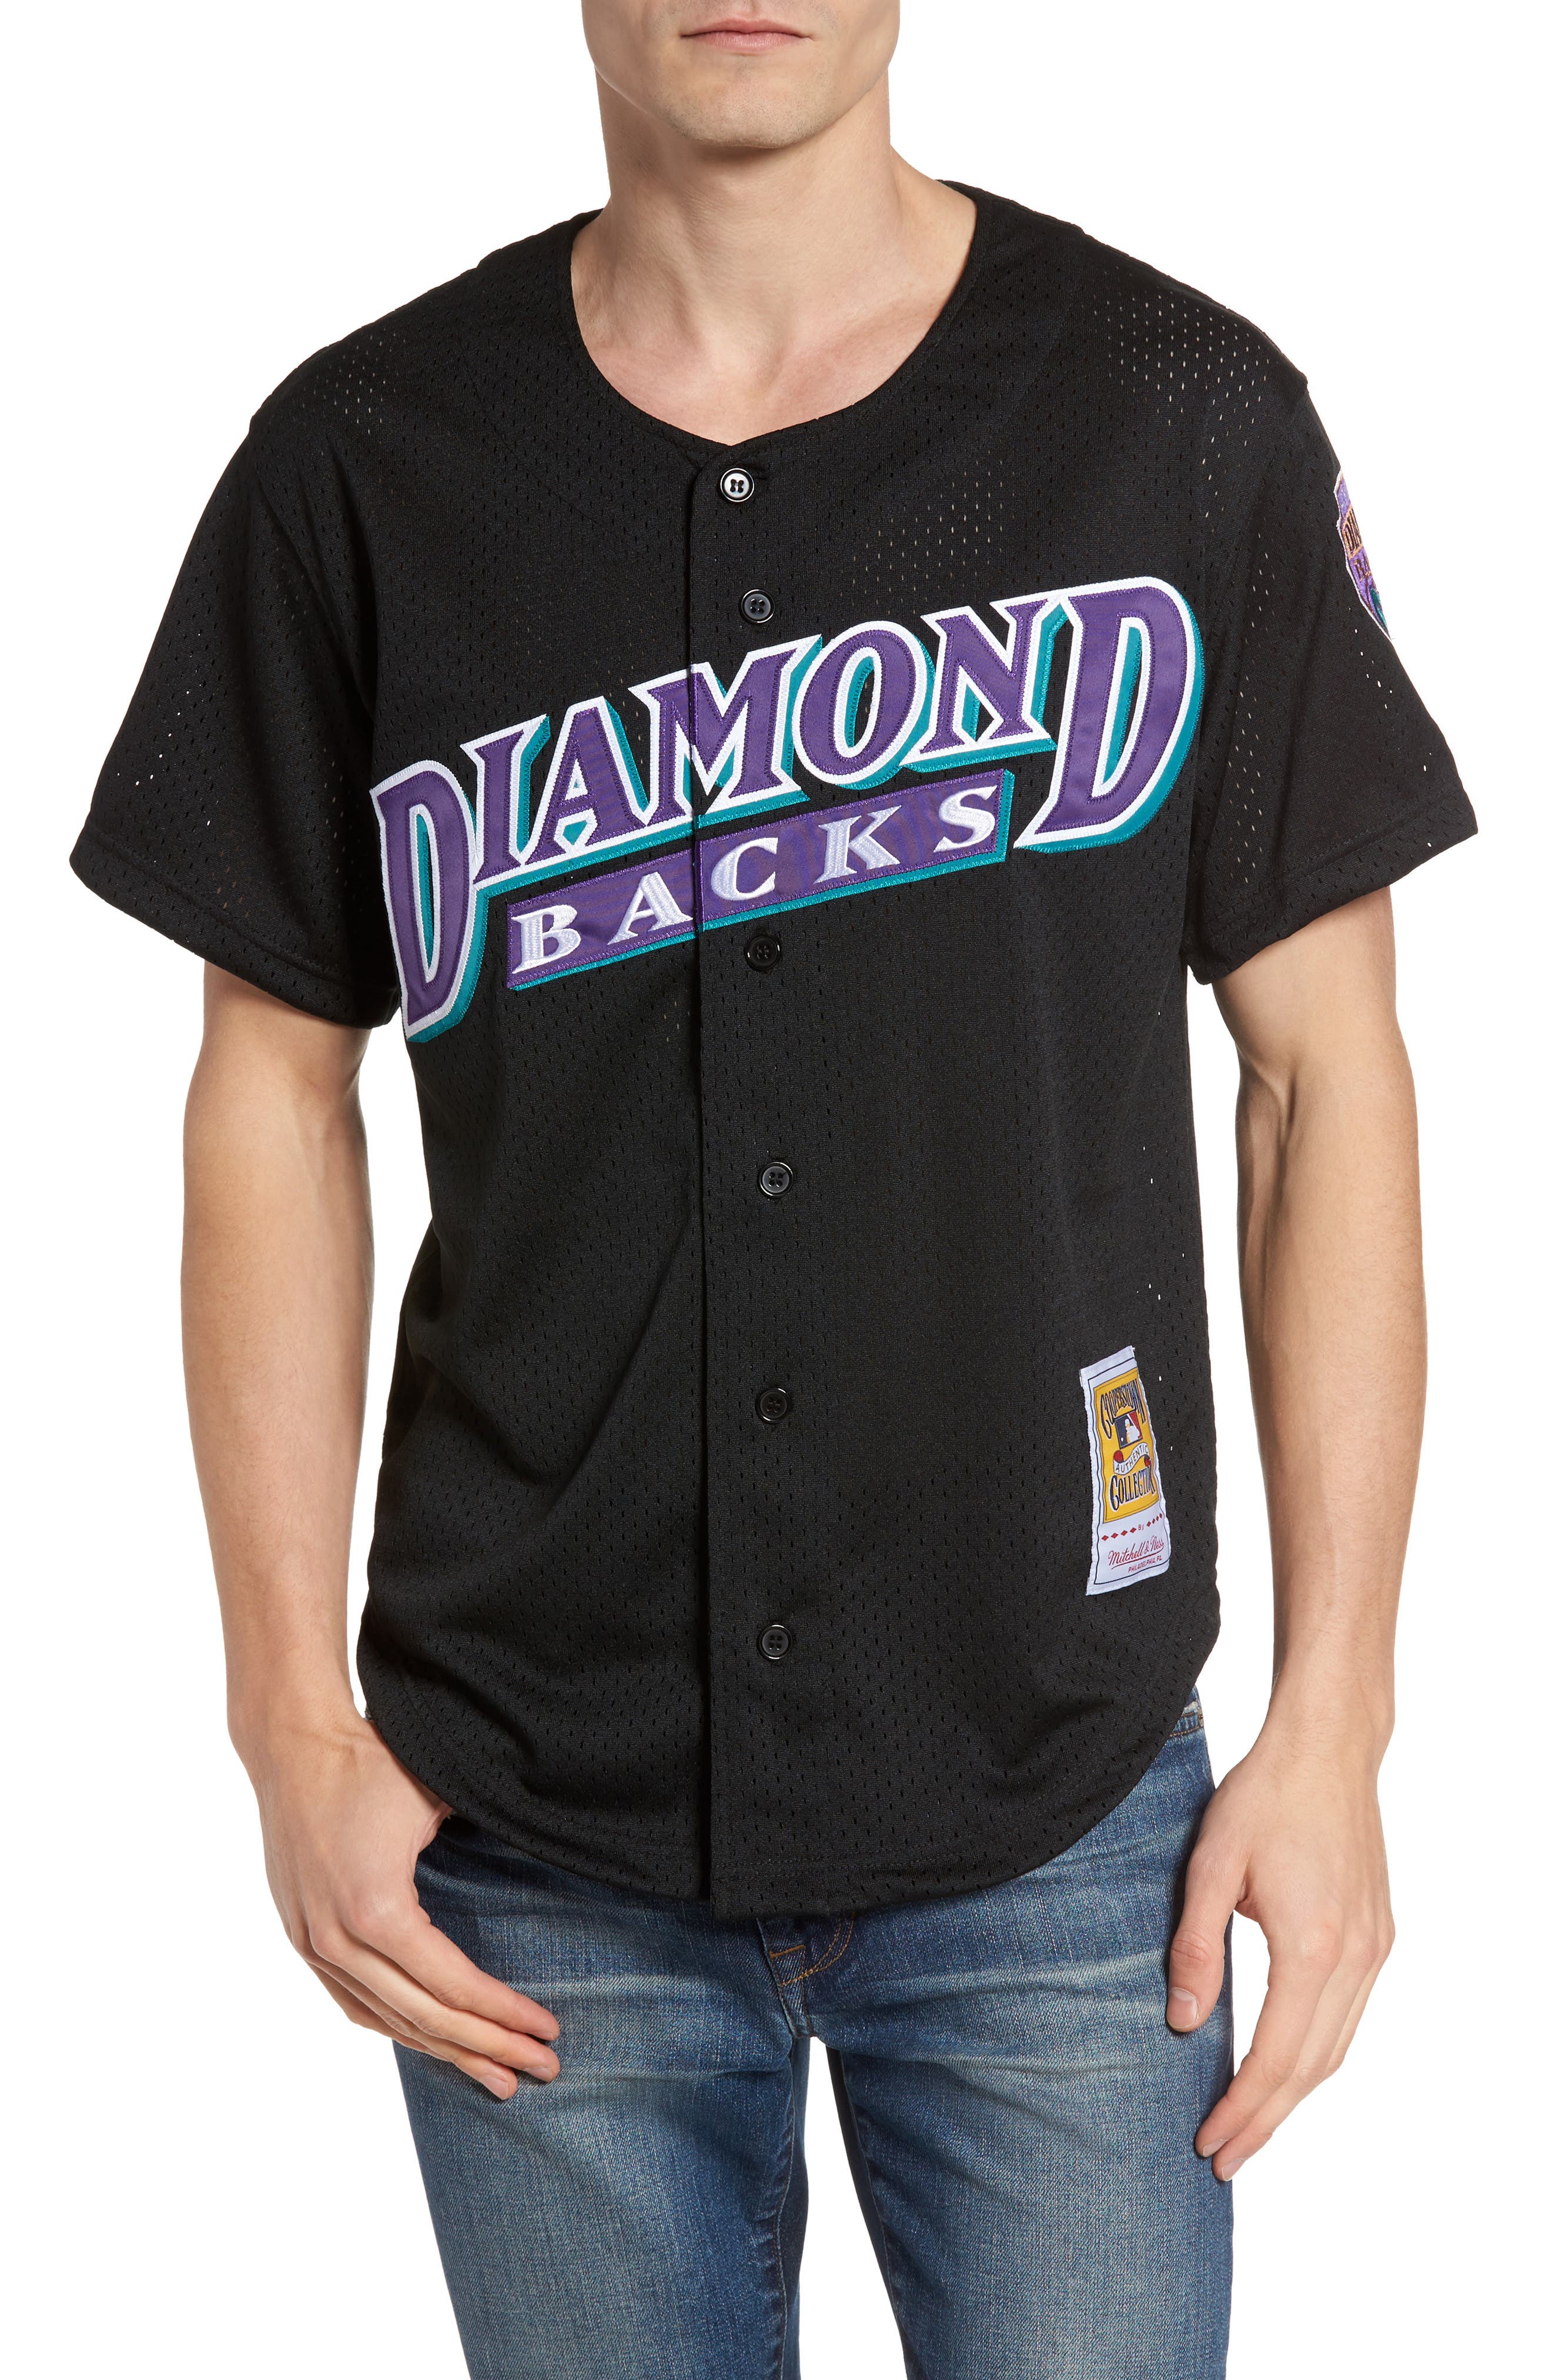 diamondbacks randy johnson jersey